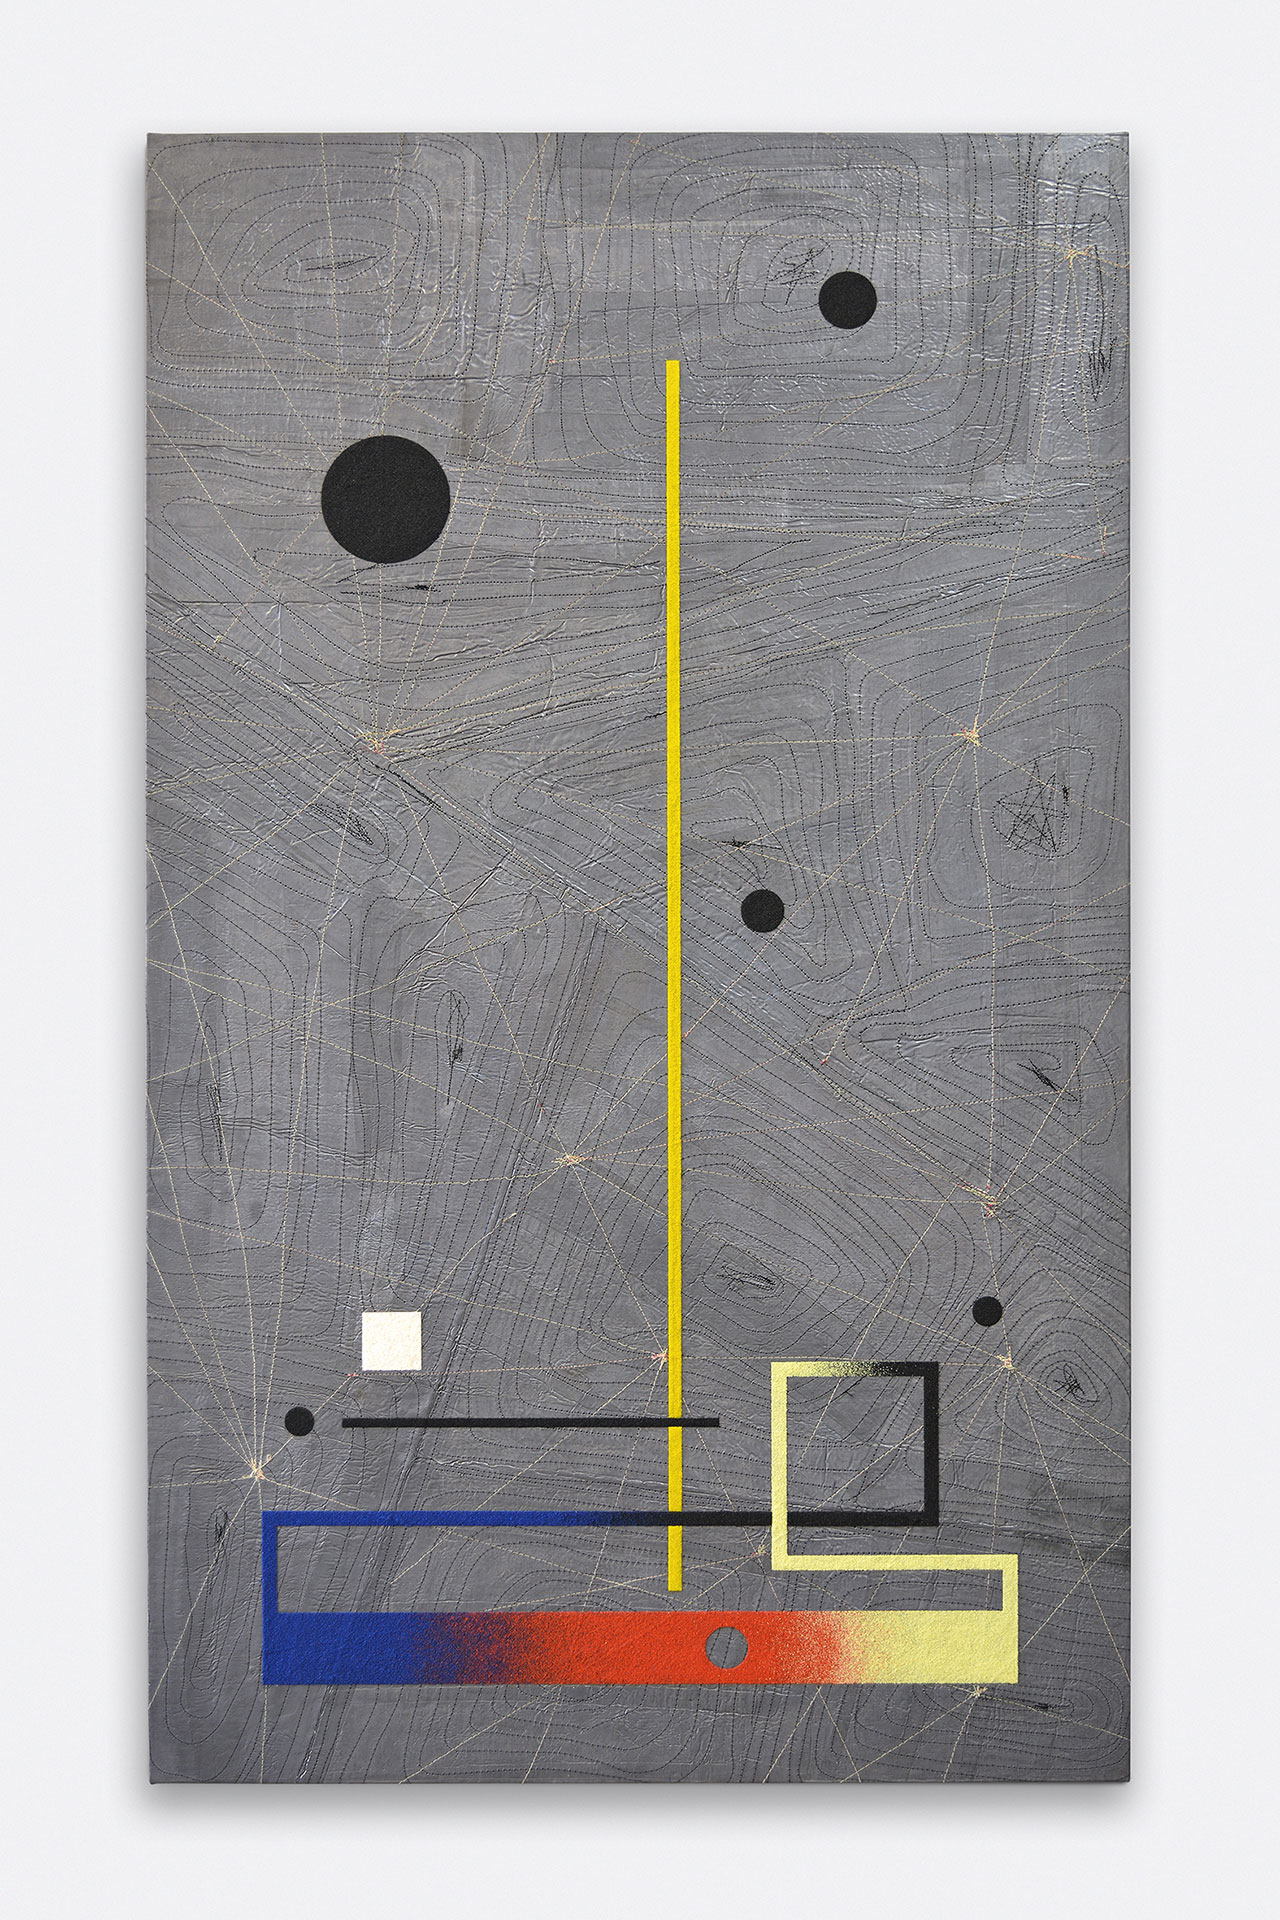 Leonardo Ulian, Matrix board series 11 - Four transitions, 2017, Lead, canvass, wood, mdf, thread, colour sand, varnish, 115x68x4, 5 cm. Courtesy: The Flat – Massimo Carasi. Photo by the artist.